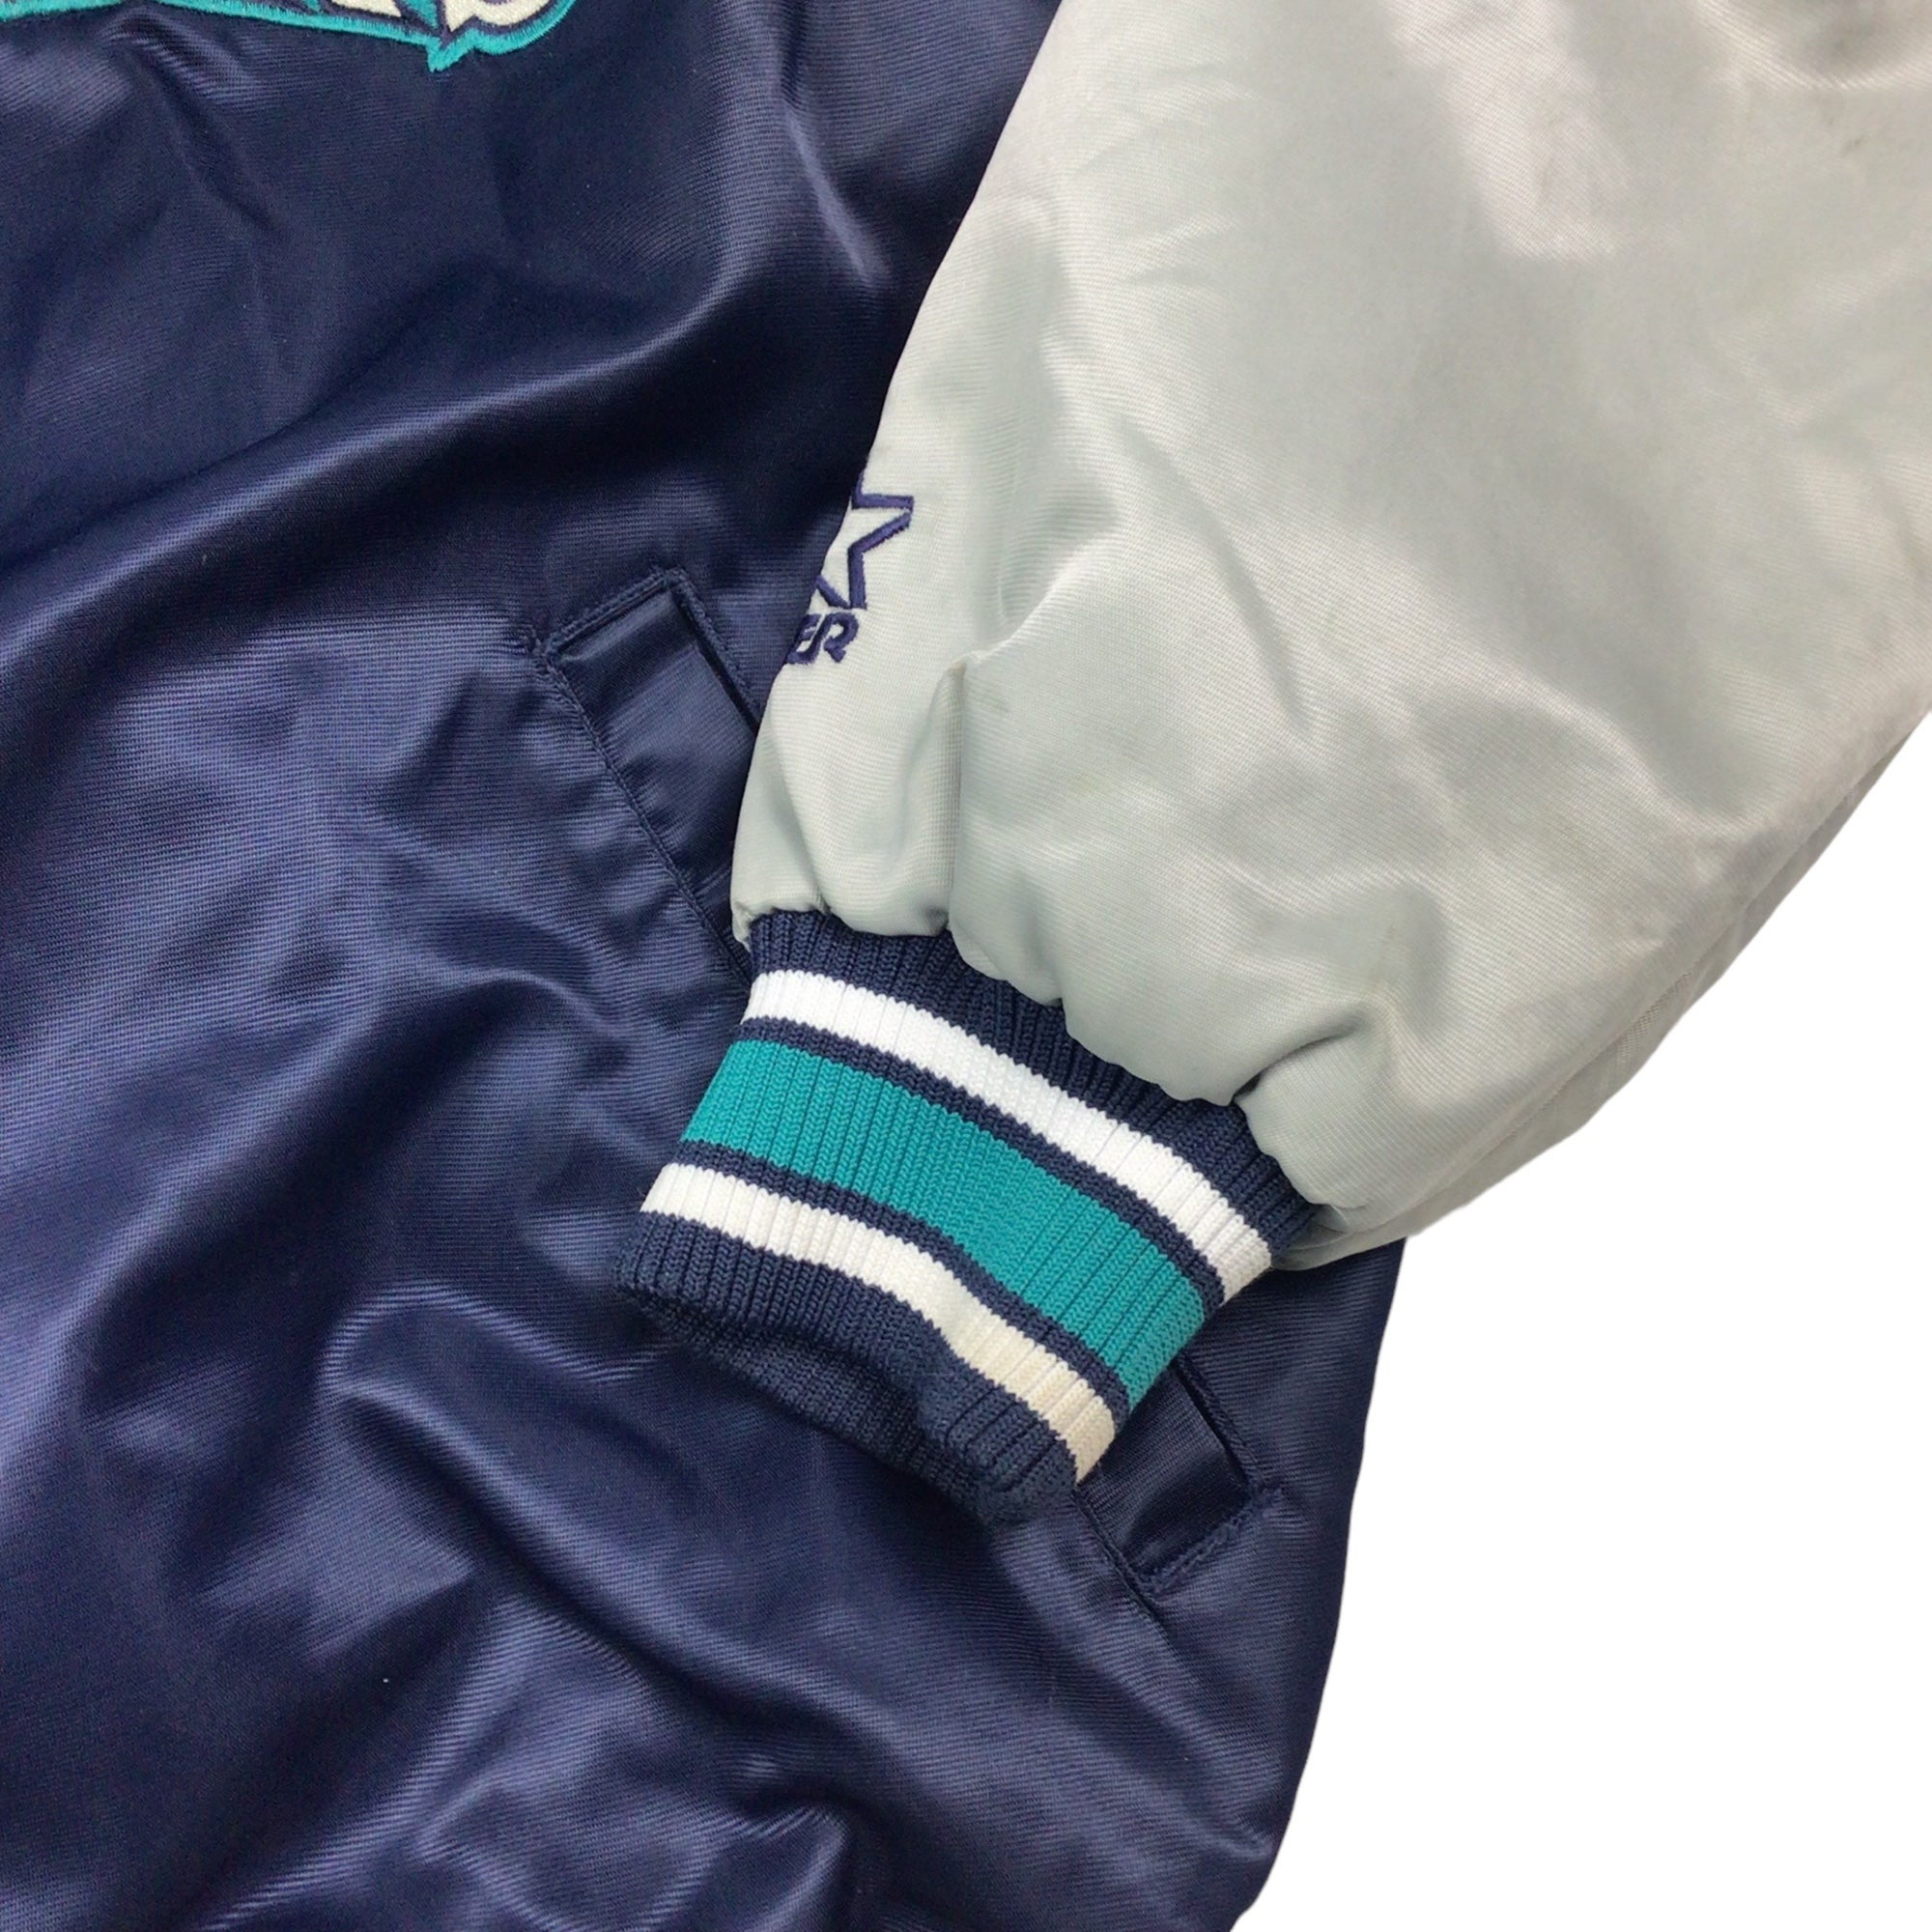 Maker of Jacket Fashion Jackets Seattle Mariners MLB Blue 90s Satin